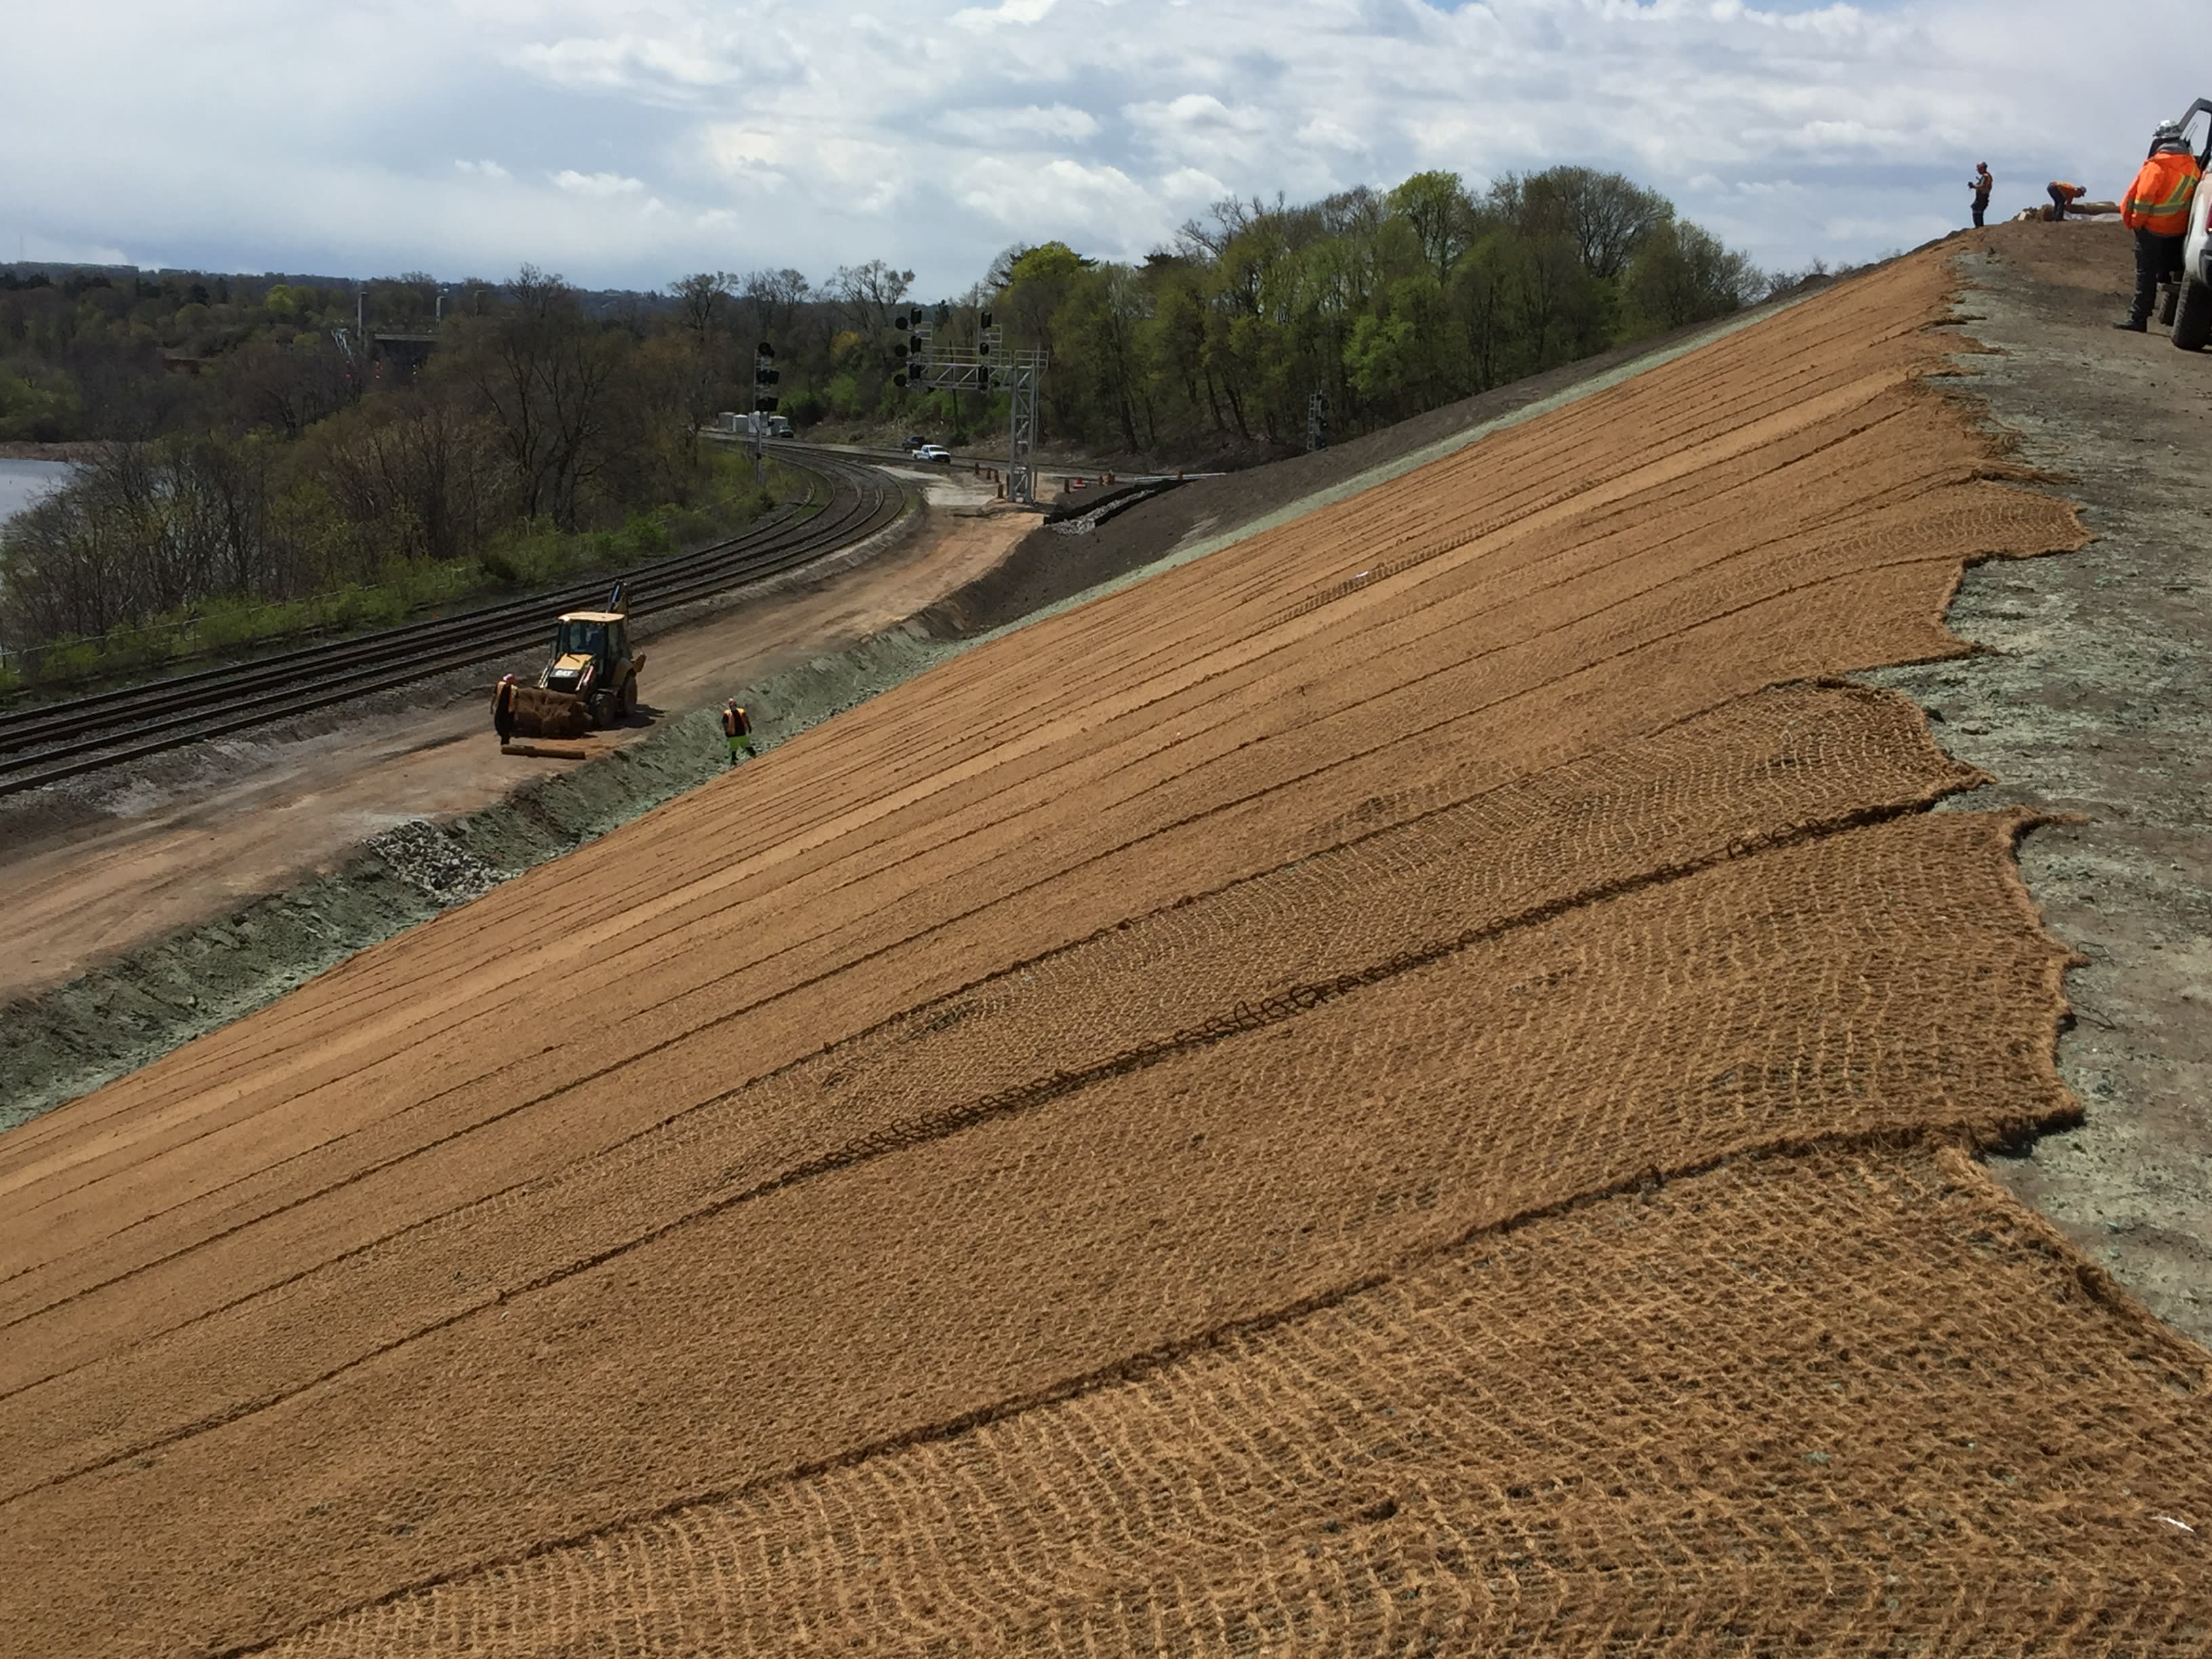 A large ridge of soil created to build a new train track near Hamilton